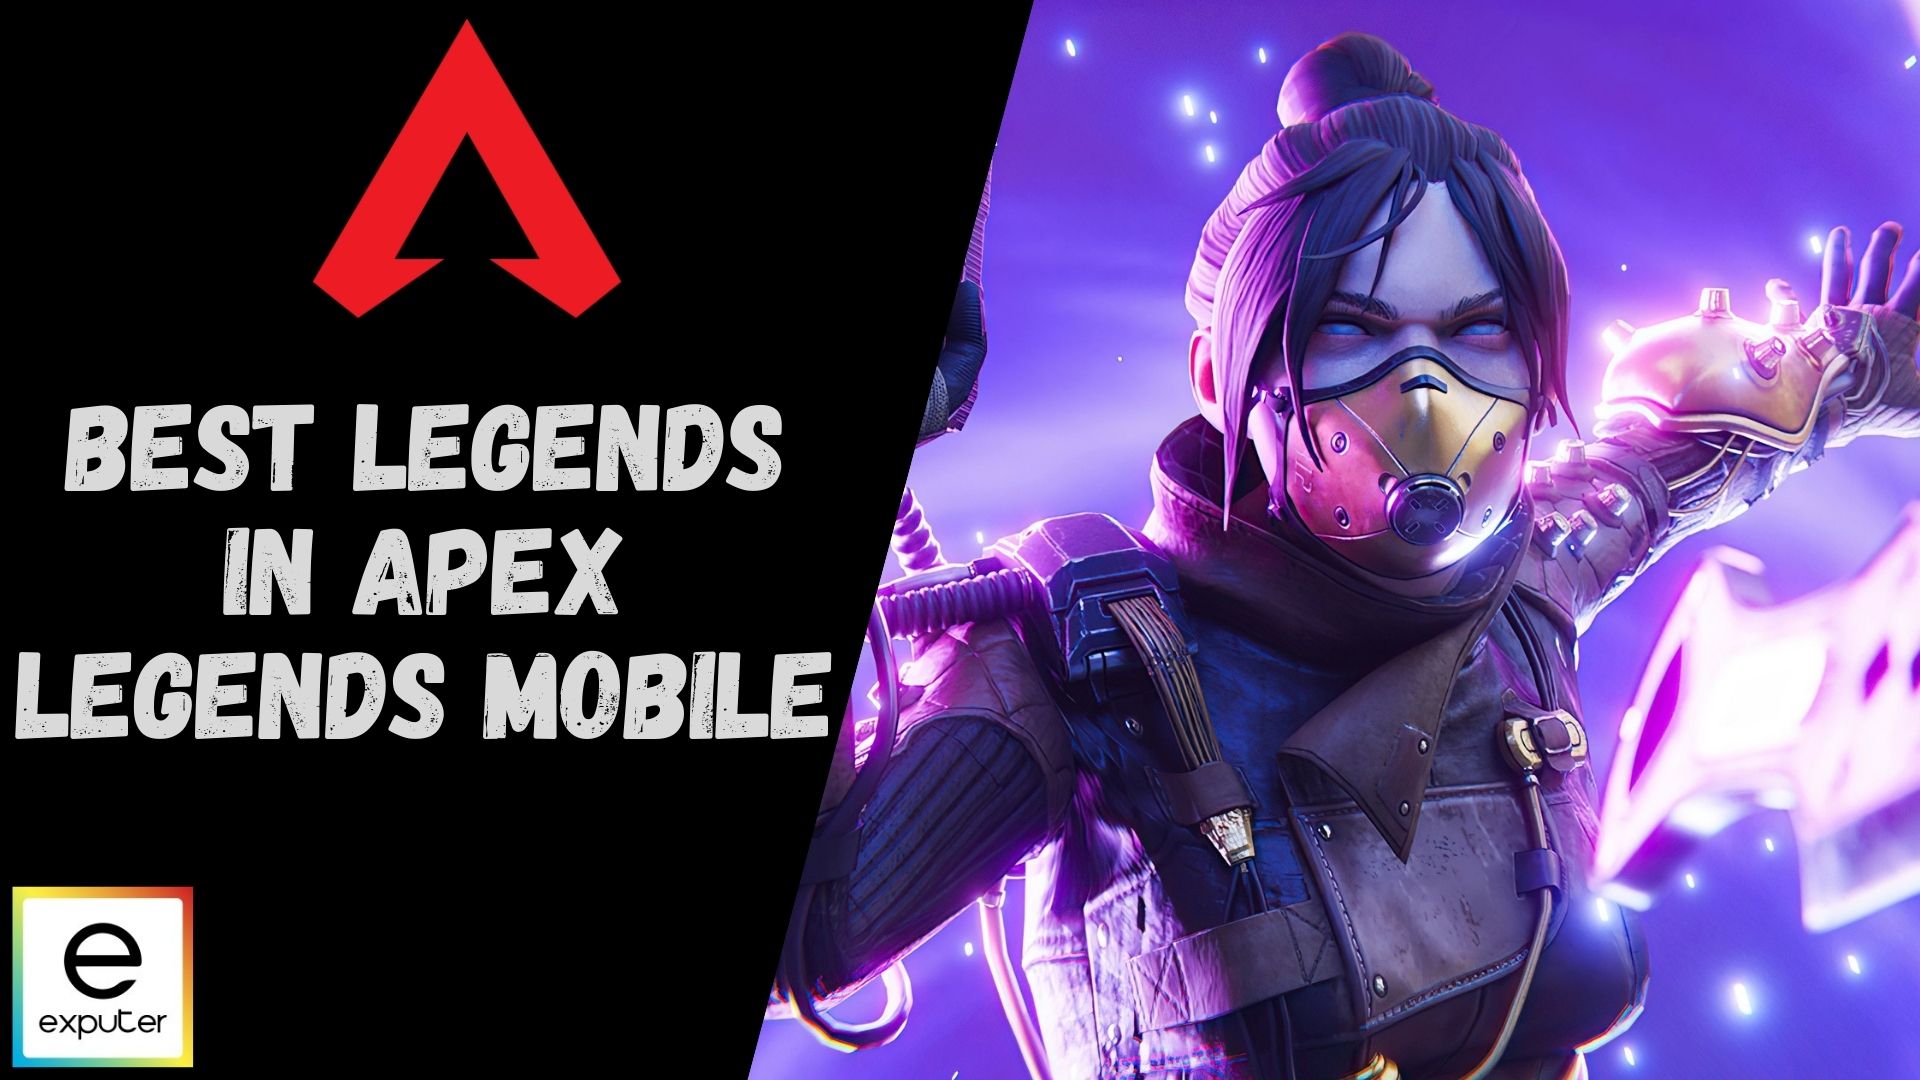 I underestimated Apex Legends Mobile, it's doing great! : r/apexlegends